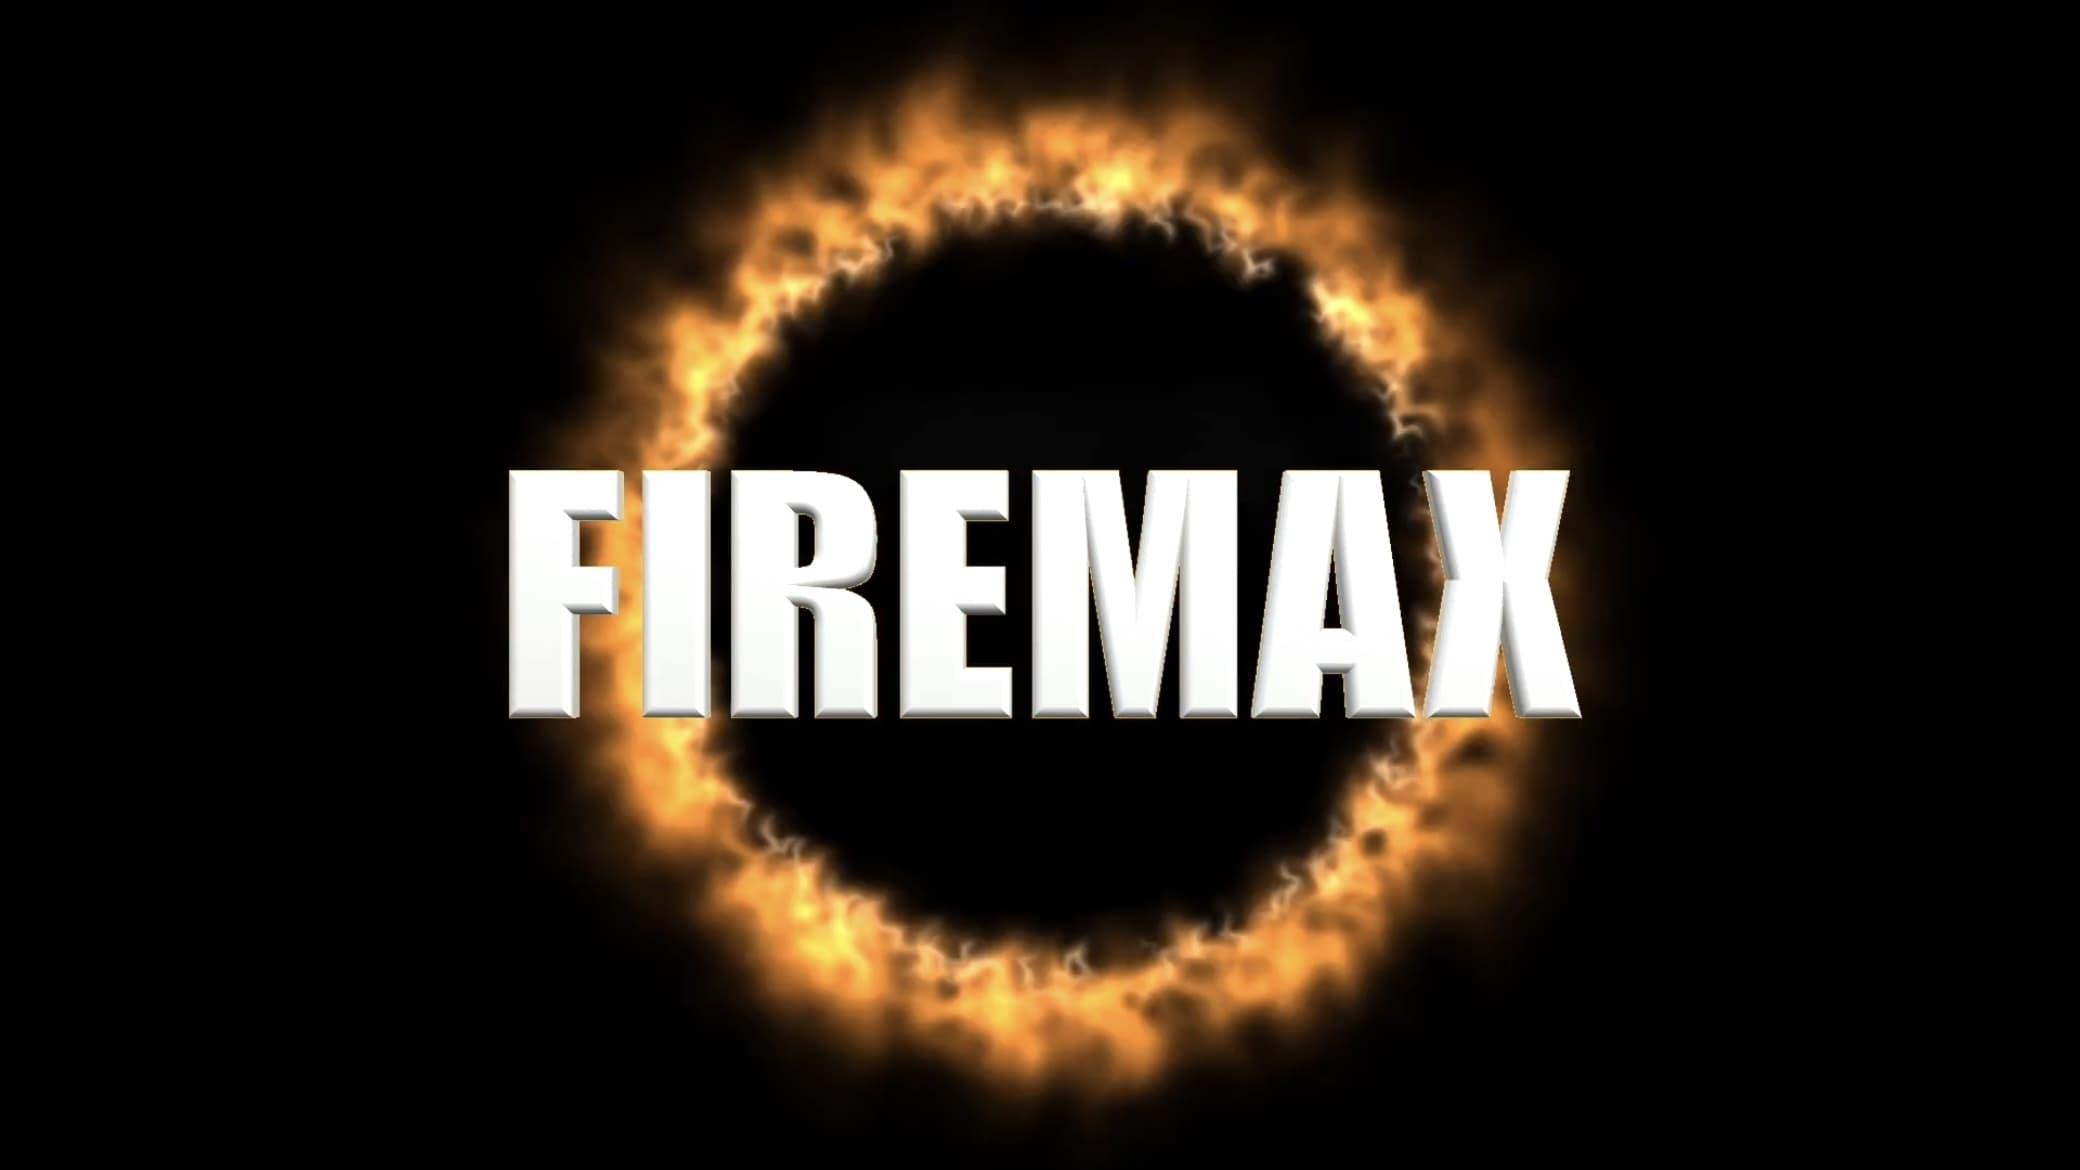 Firemax backdrop